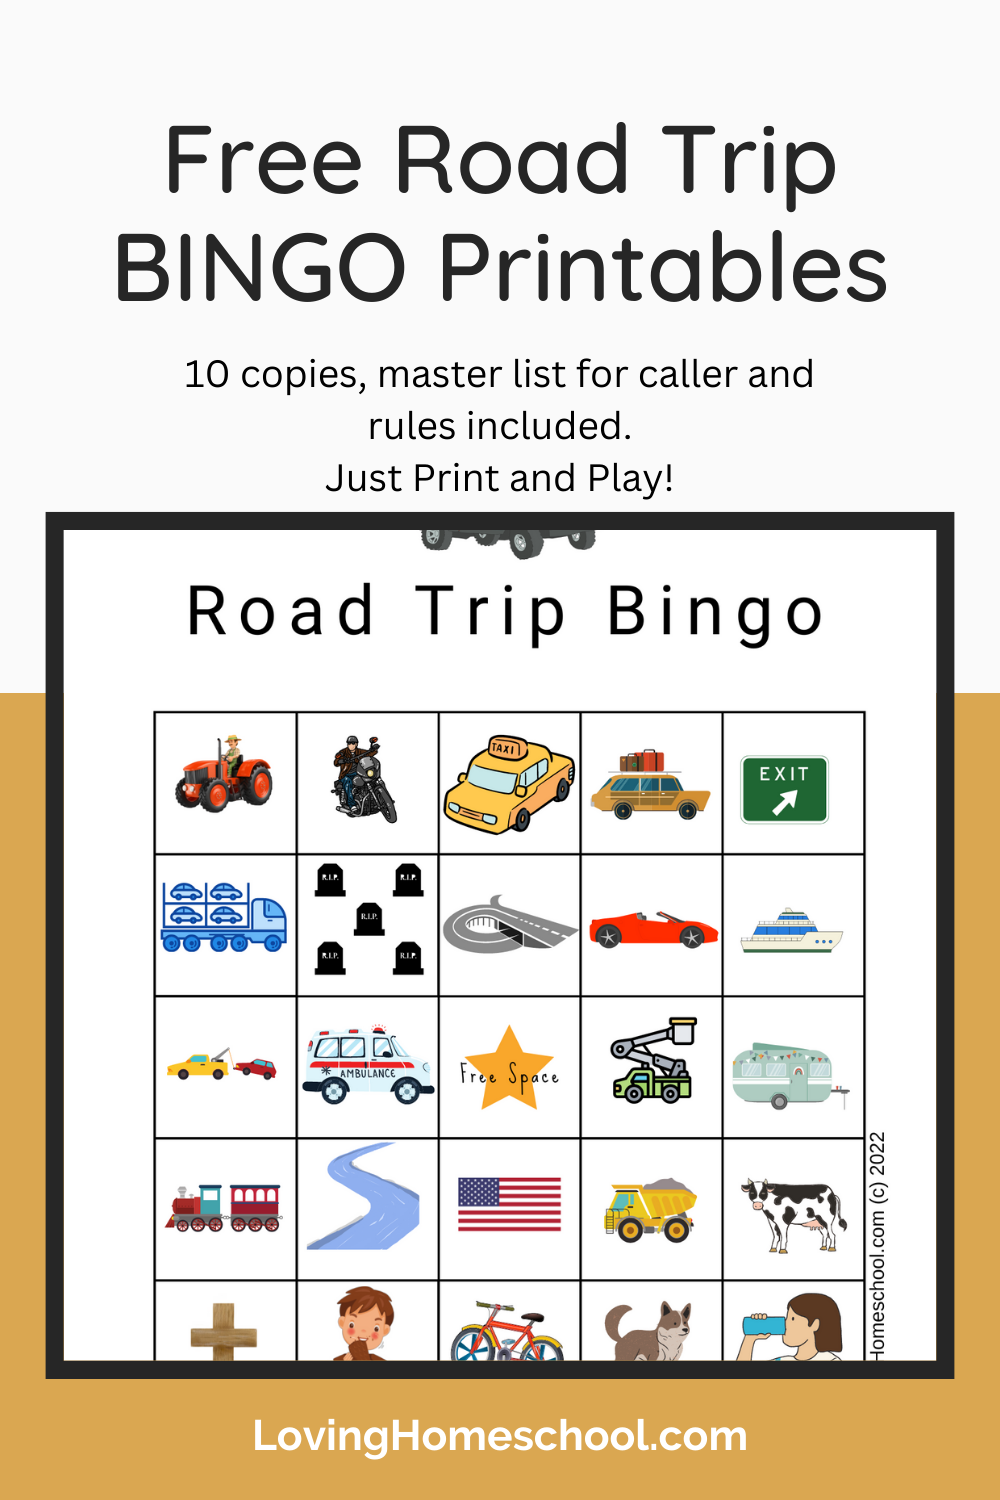 Free Road Trip BINGO Printables Pinterest Pin